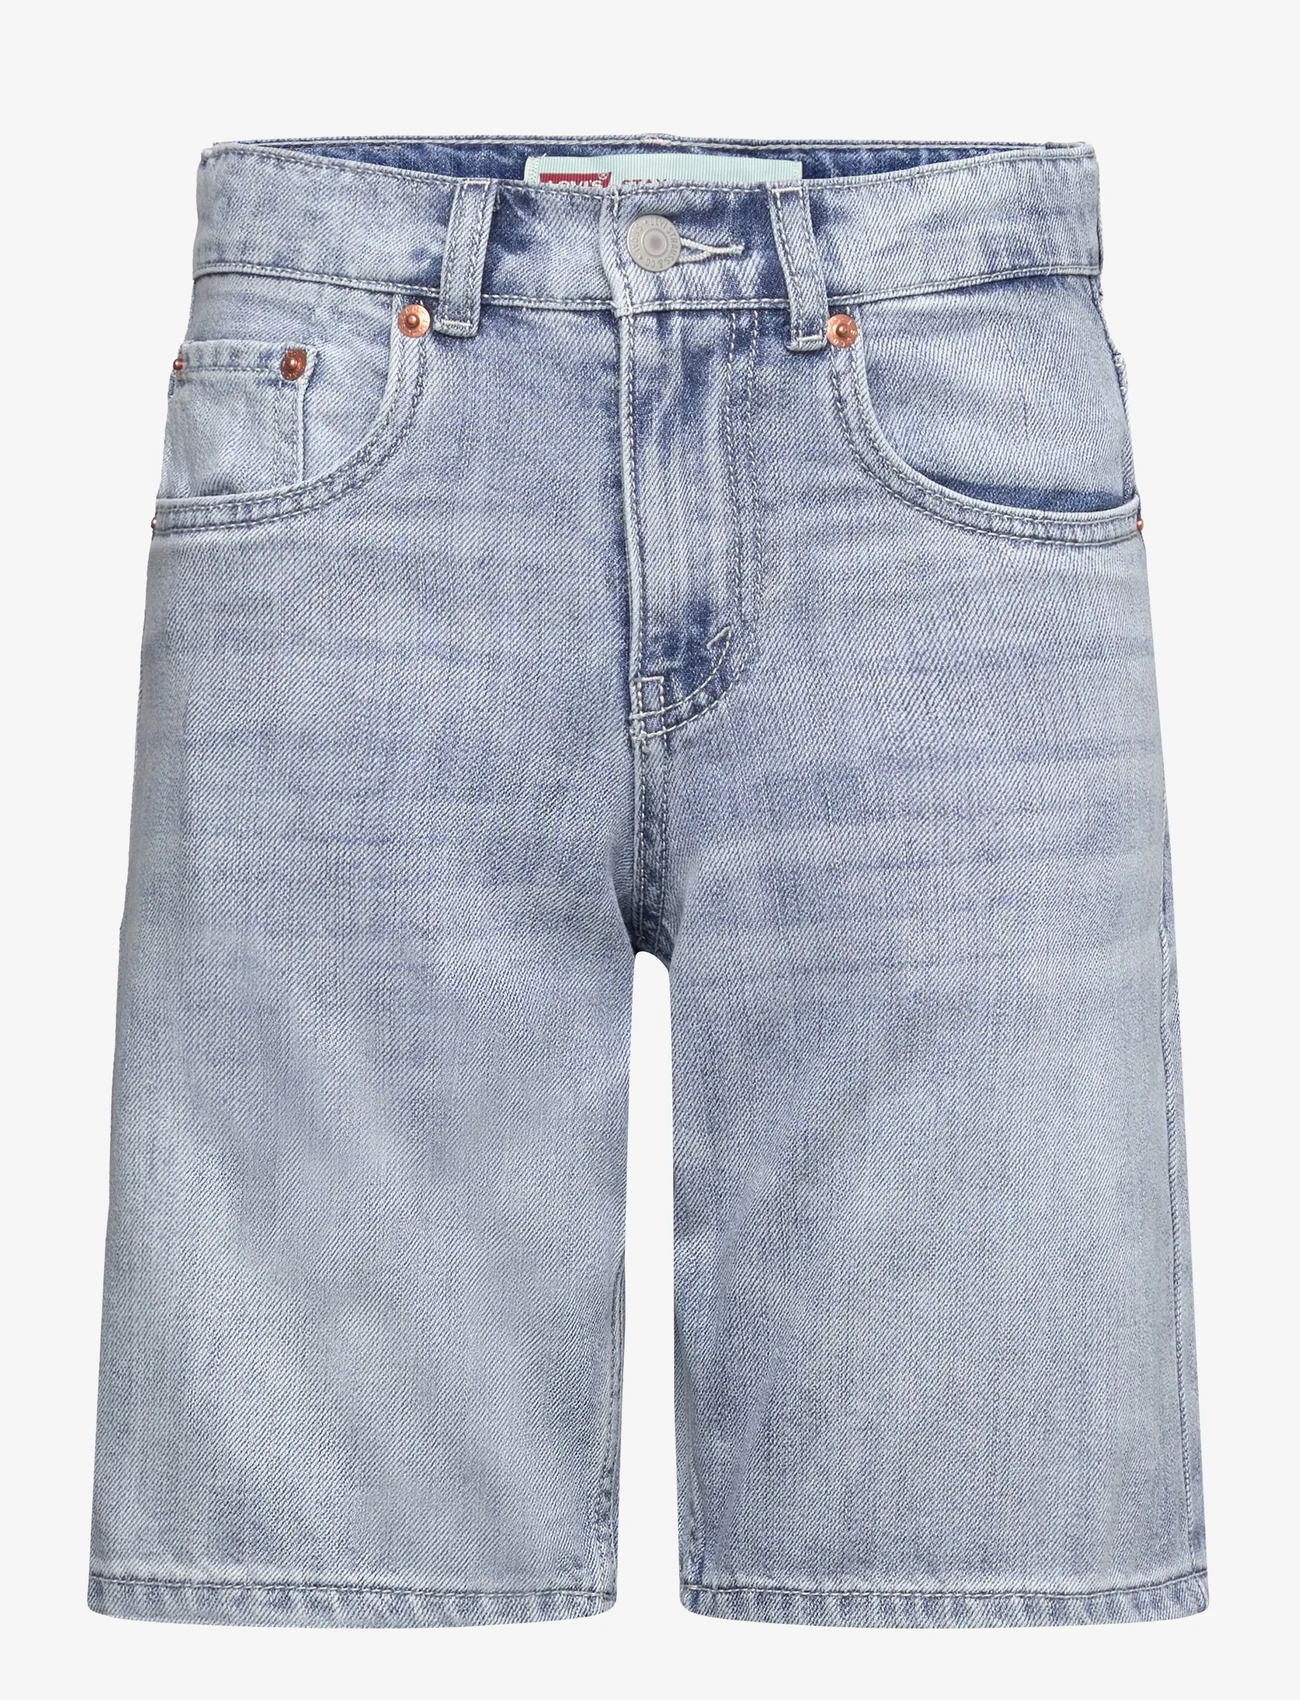 Levi's - Levi's Stay Loose Denim Shorts - korte jeansbroeken - blue - 0